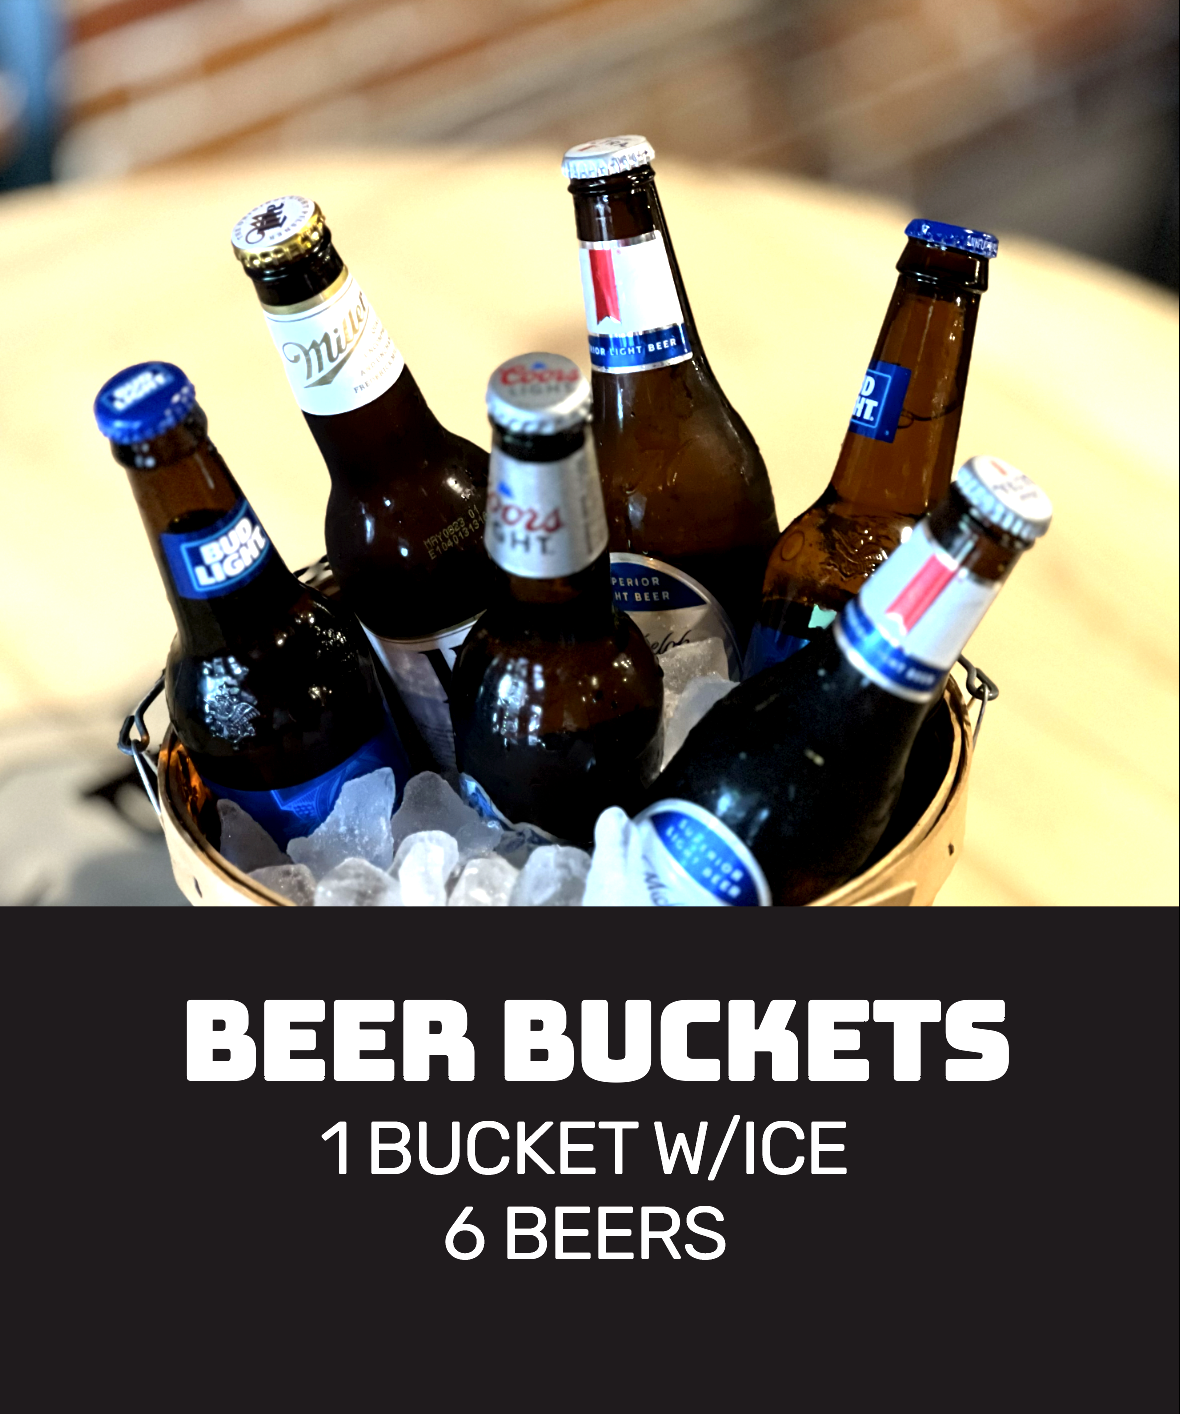 OTR Beer Bucket